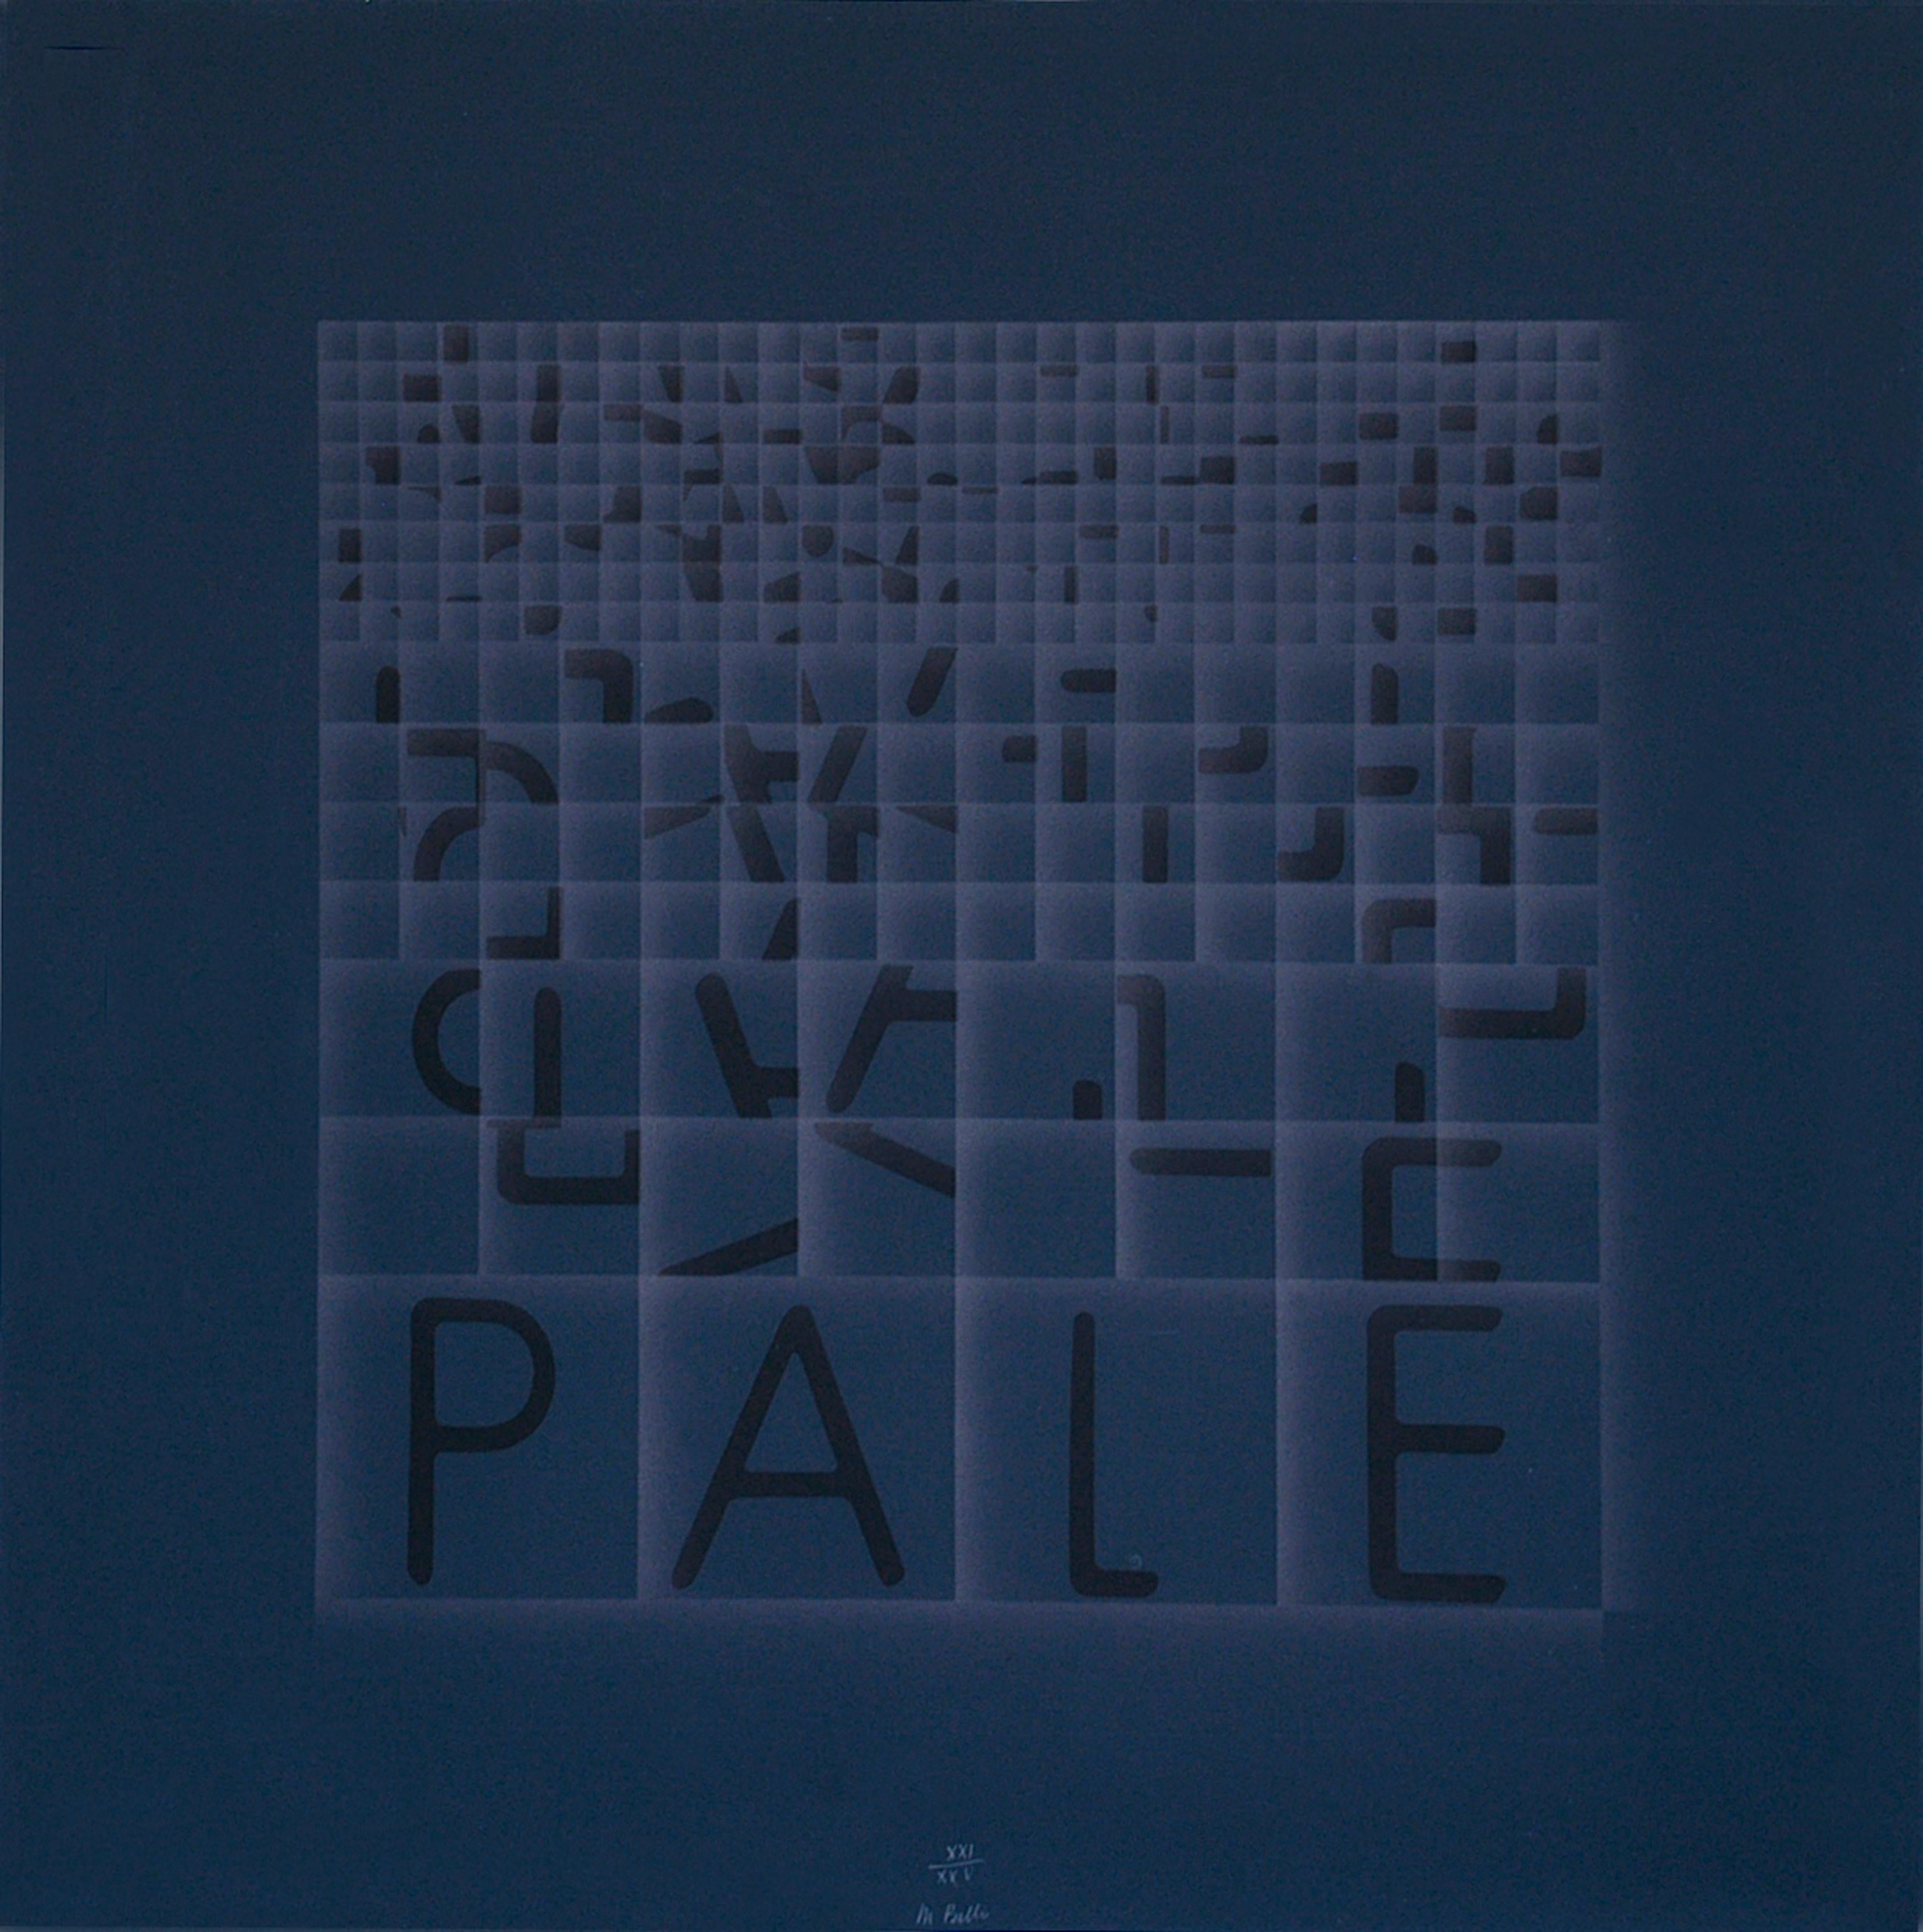 Pale (Blades) - Sérigraphie de Bruno di Bello - 1980 environ